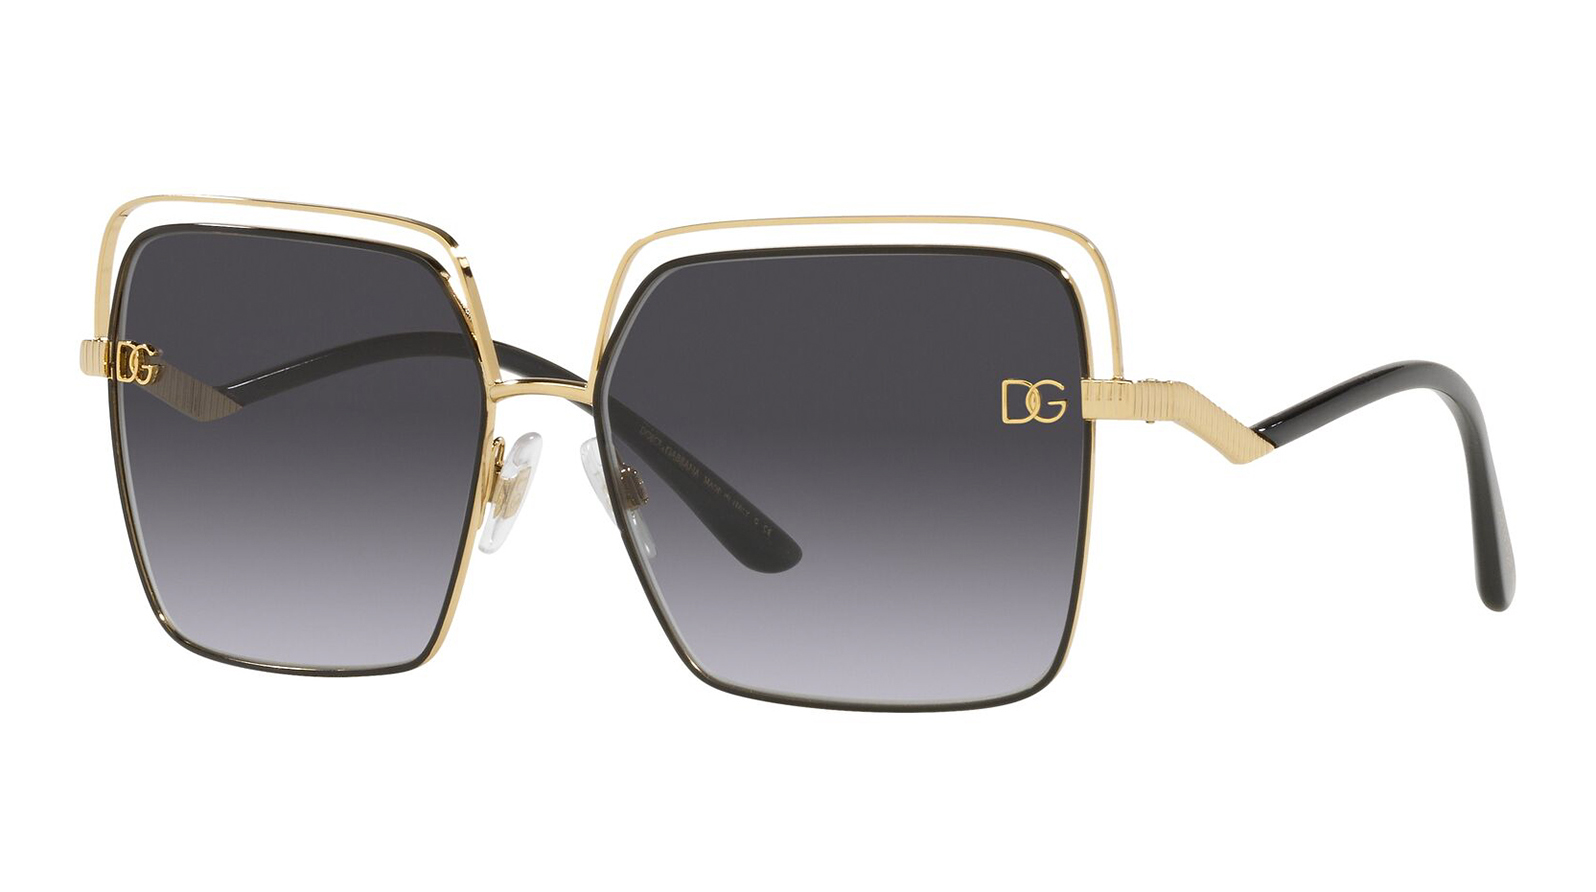 Dolce&Gabbana 2268 13348G кафа франц очки поляризационные муж арт cf341532 линза серая зеркал